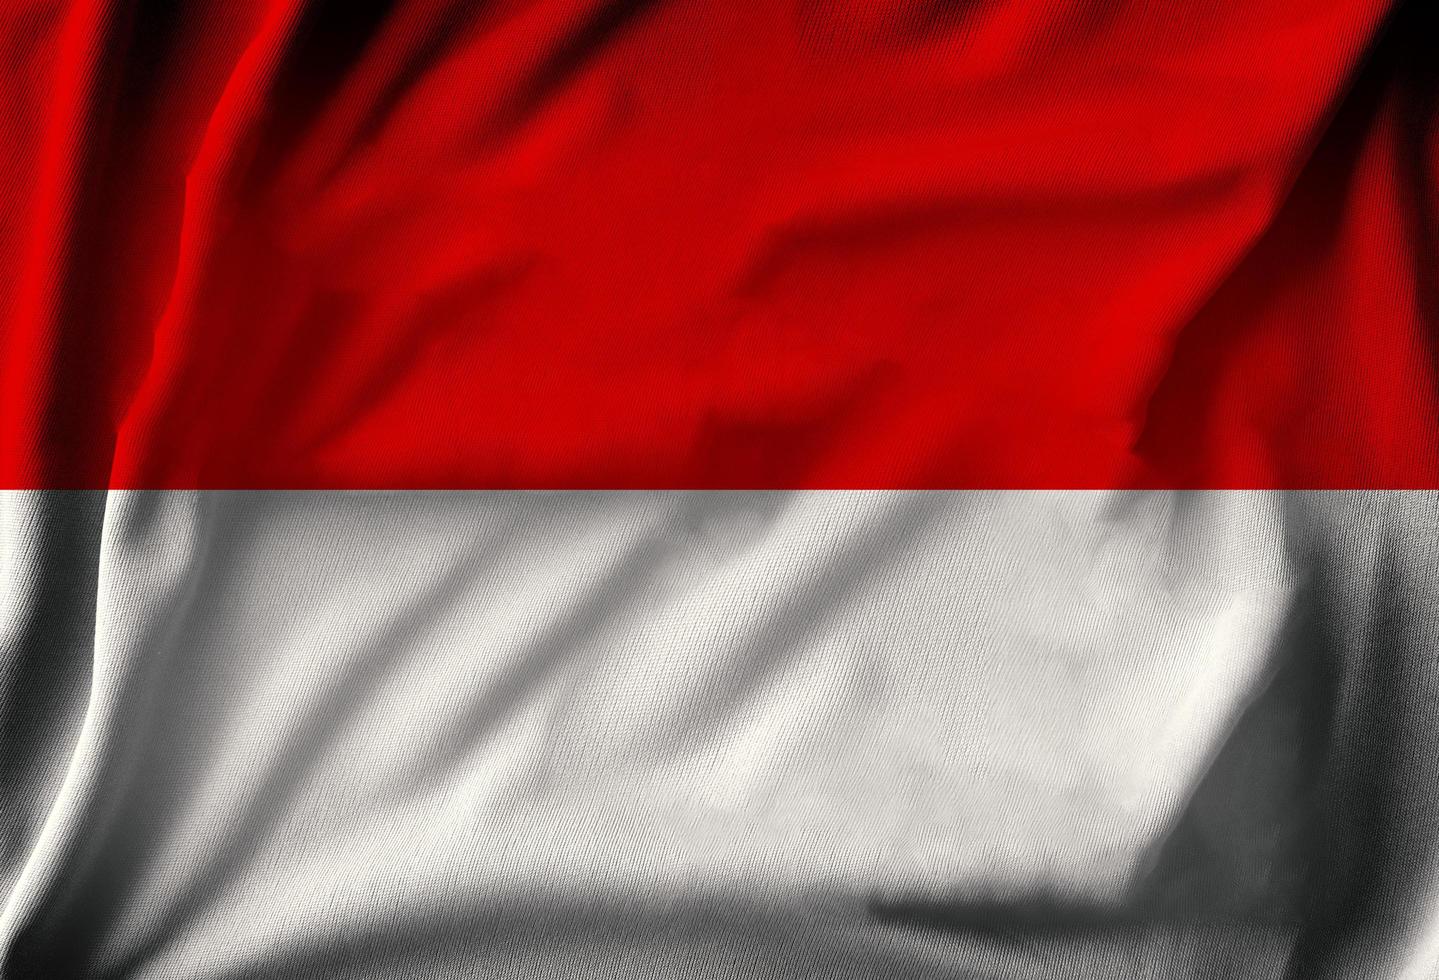 Flag of Indonesia photo